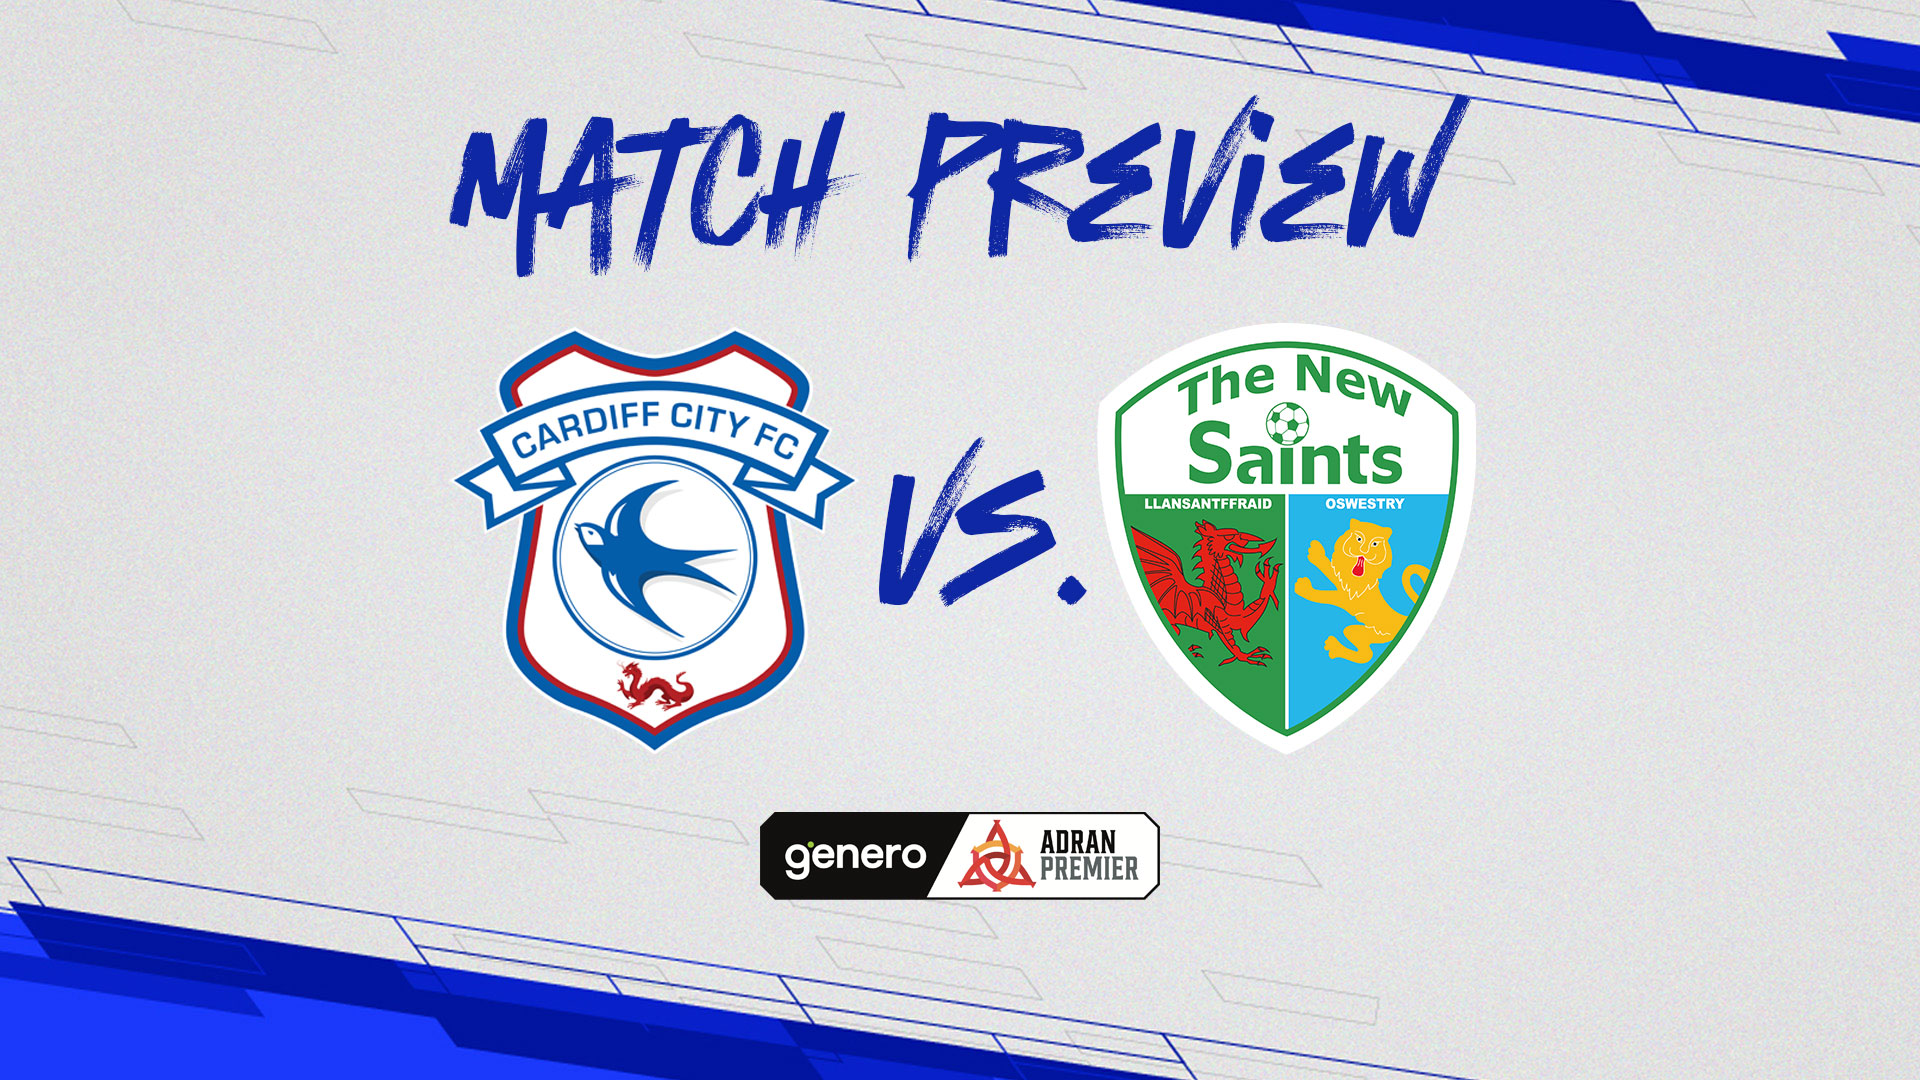 Match Preview: Cardiff City Women vs. The New Saints